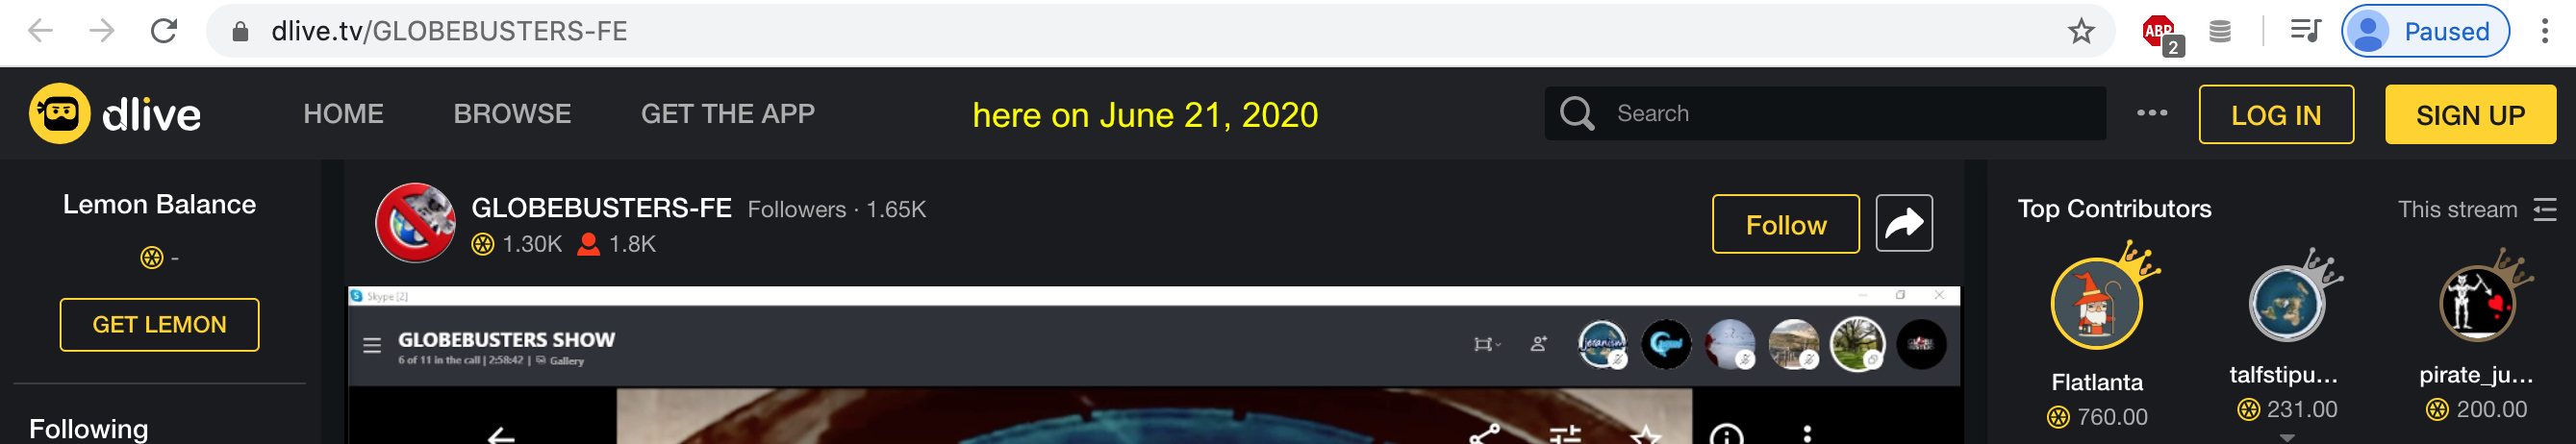 Globebusters move in June 2020.jpg